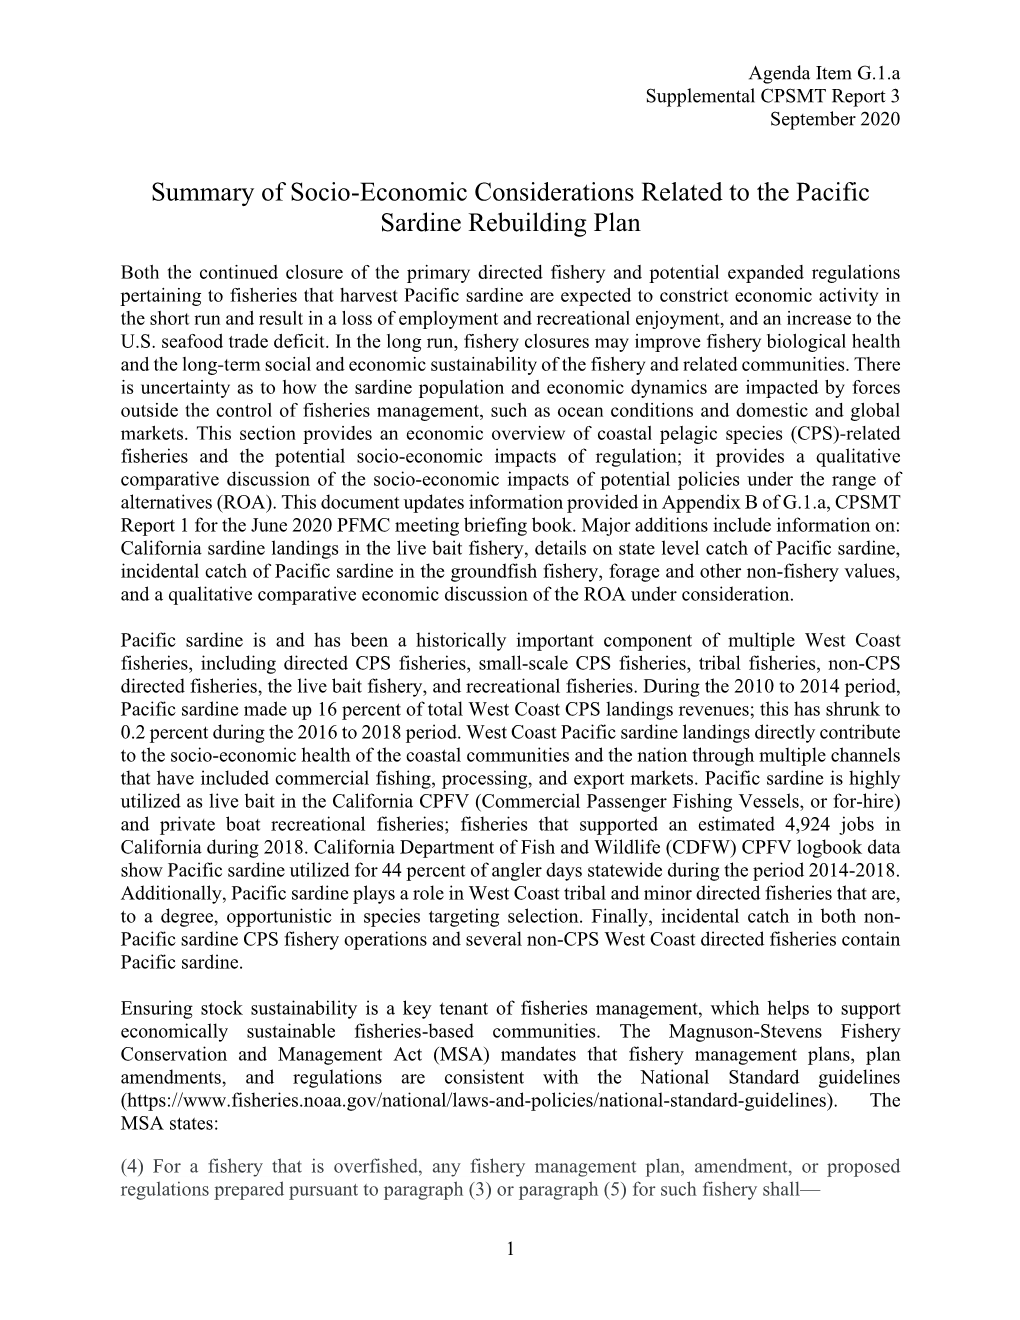 Summary of Socio-Economic Considerations Related to the Pacific Sardine Rebuilding Plan